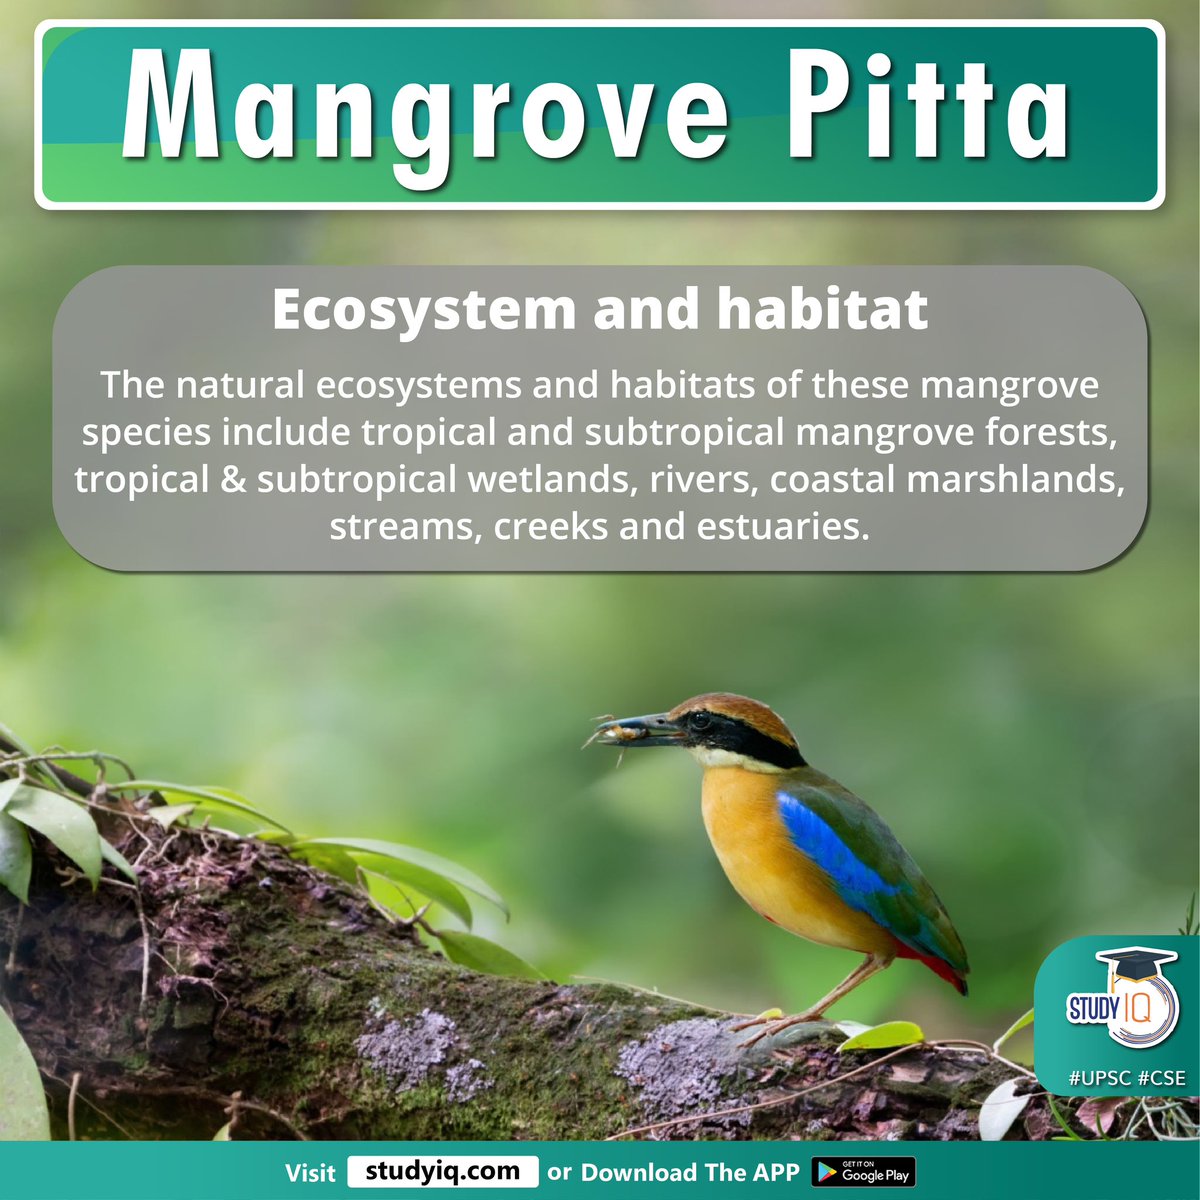 Mangrove Pitta

#mangrovepitta #birds #coastal #odisha #browncrown #whitethroat #iucn #bangladesh #myanmar #thailand #malaysia #singapore #indonesia #bhitarkanika #westbengal #naturalecosystems #mangroveforests #wetlands #rivers #upsc #cse #ips #ias